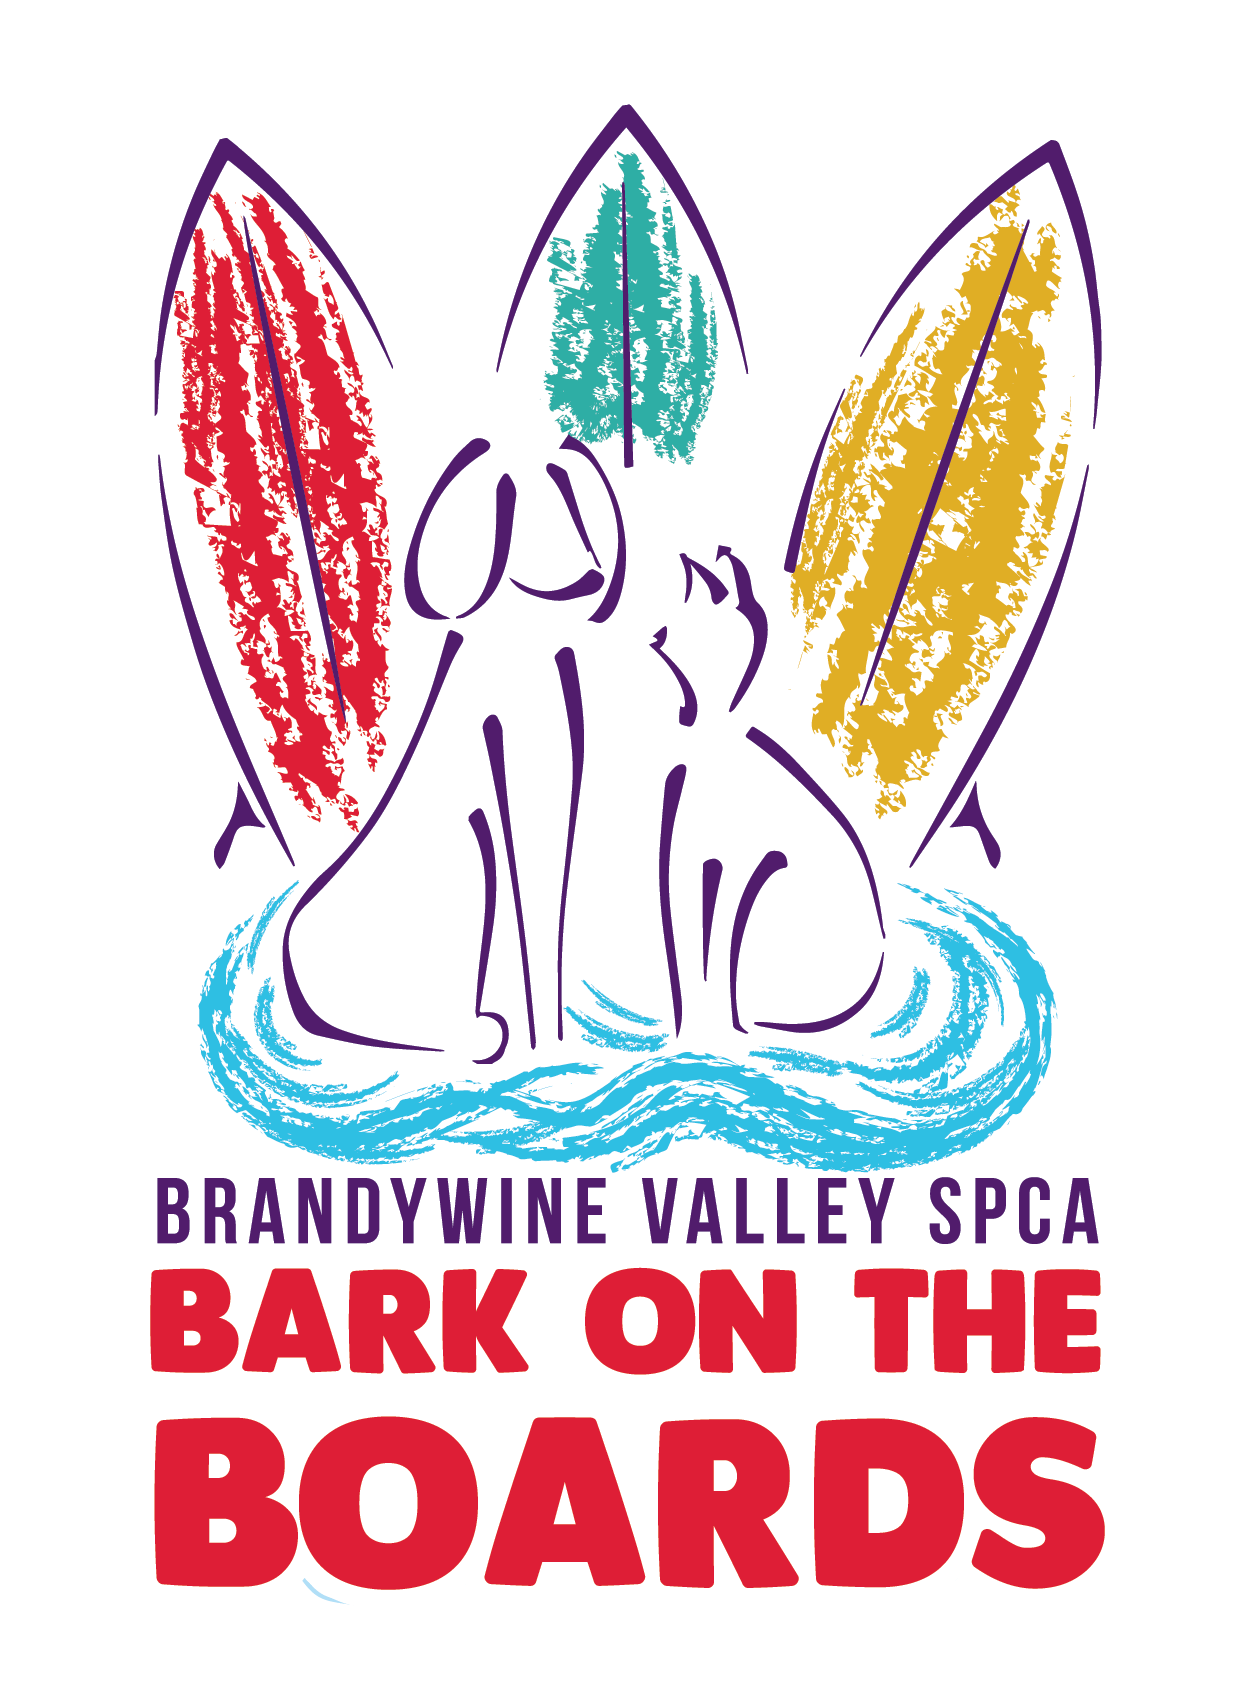 Brandywine Valley SPCA